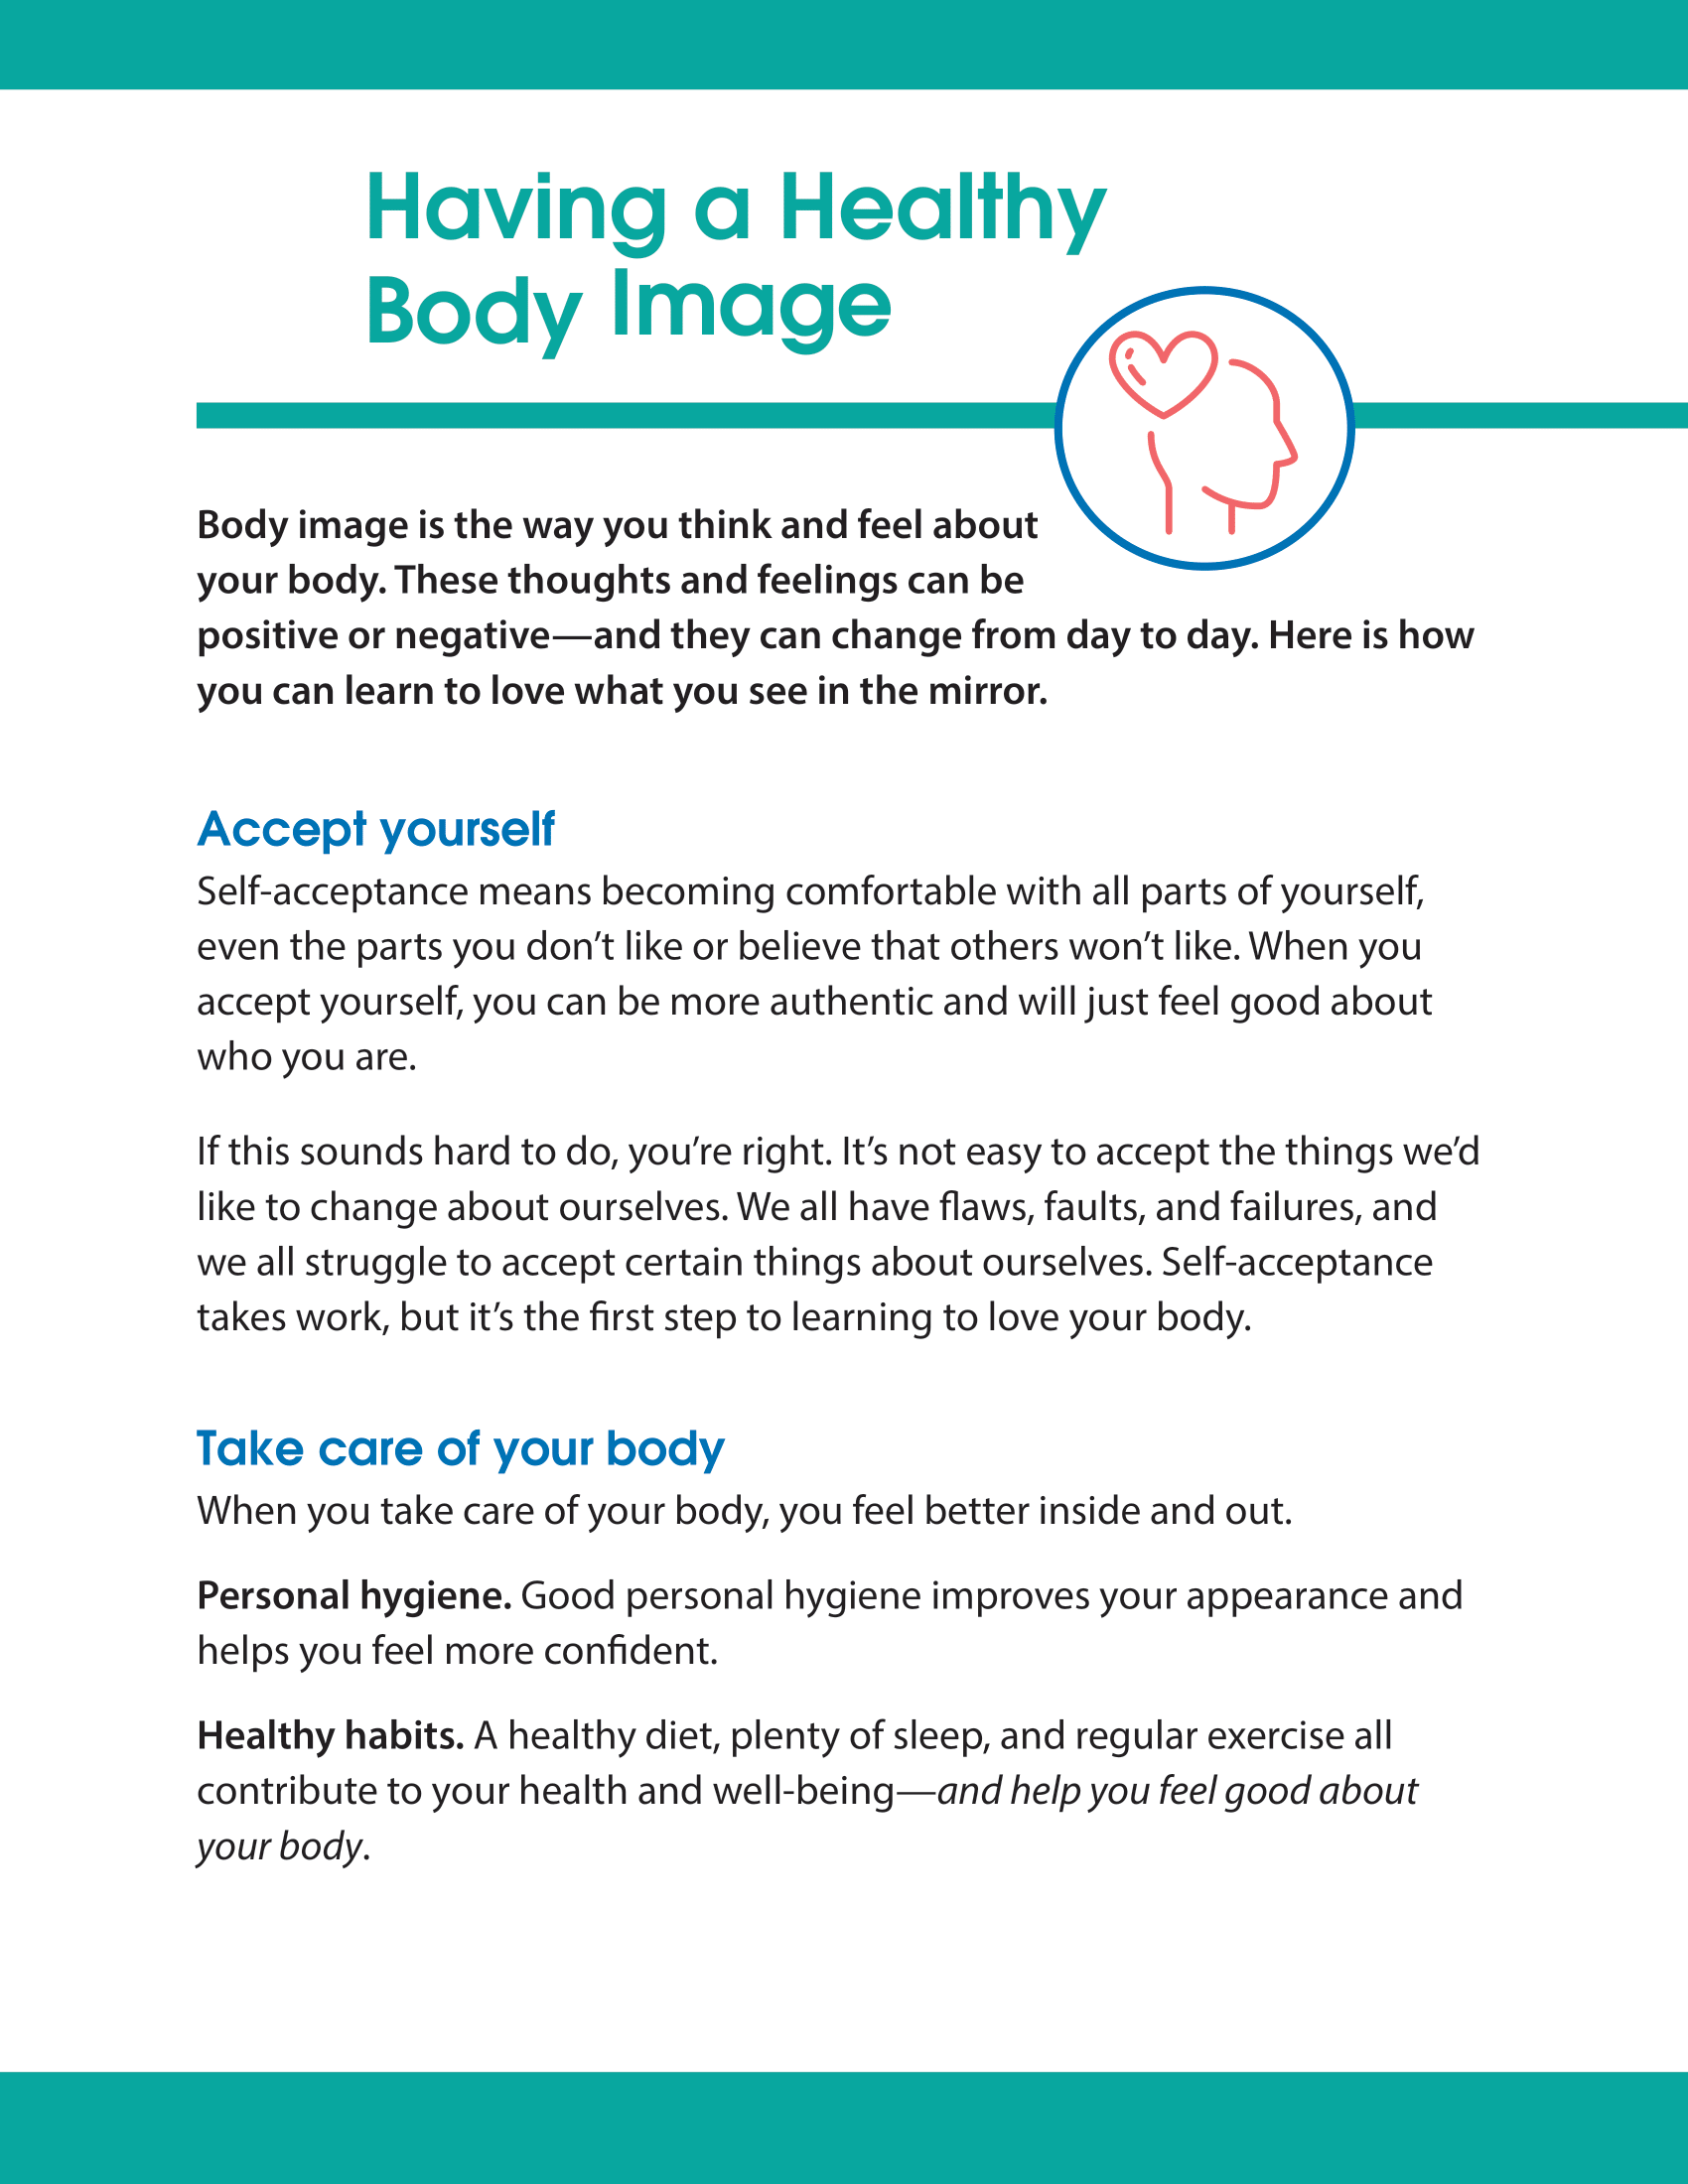 Having a Healthy Body Image